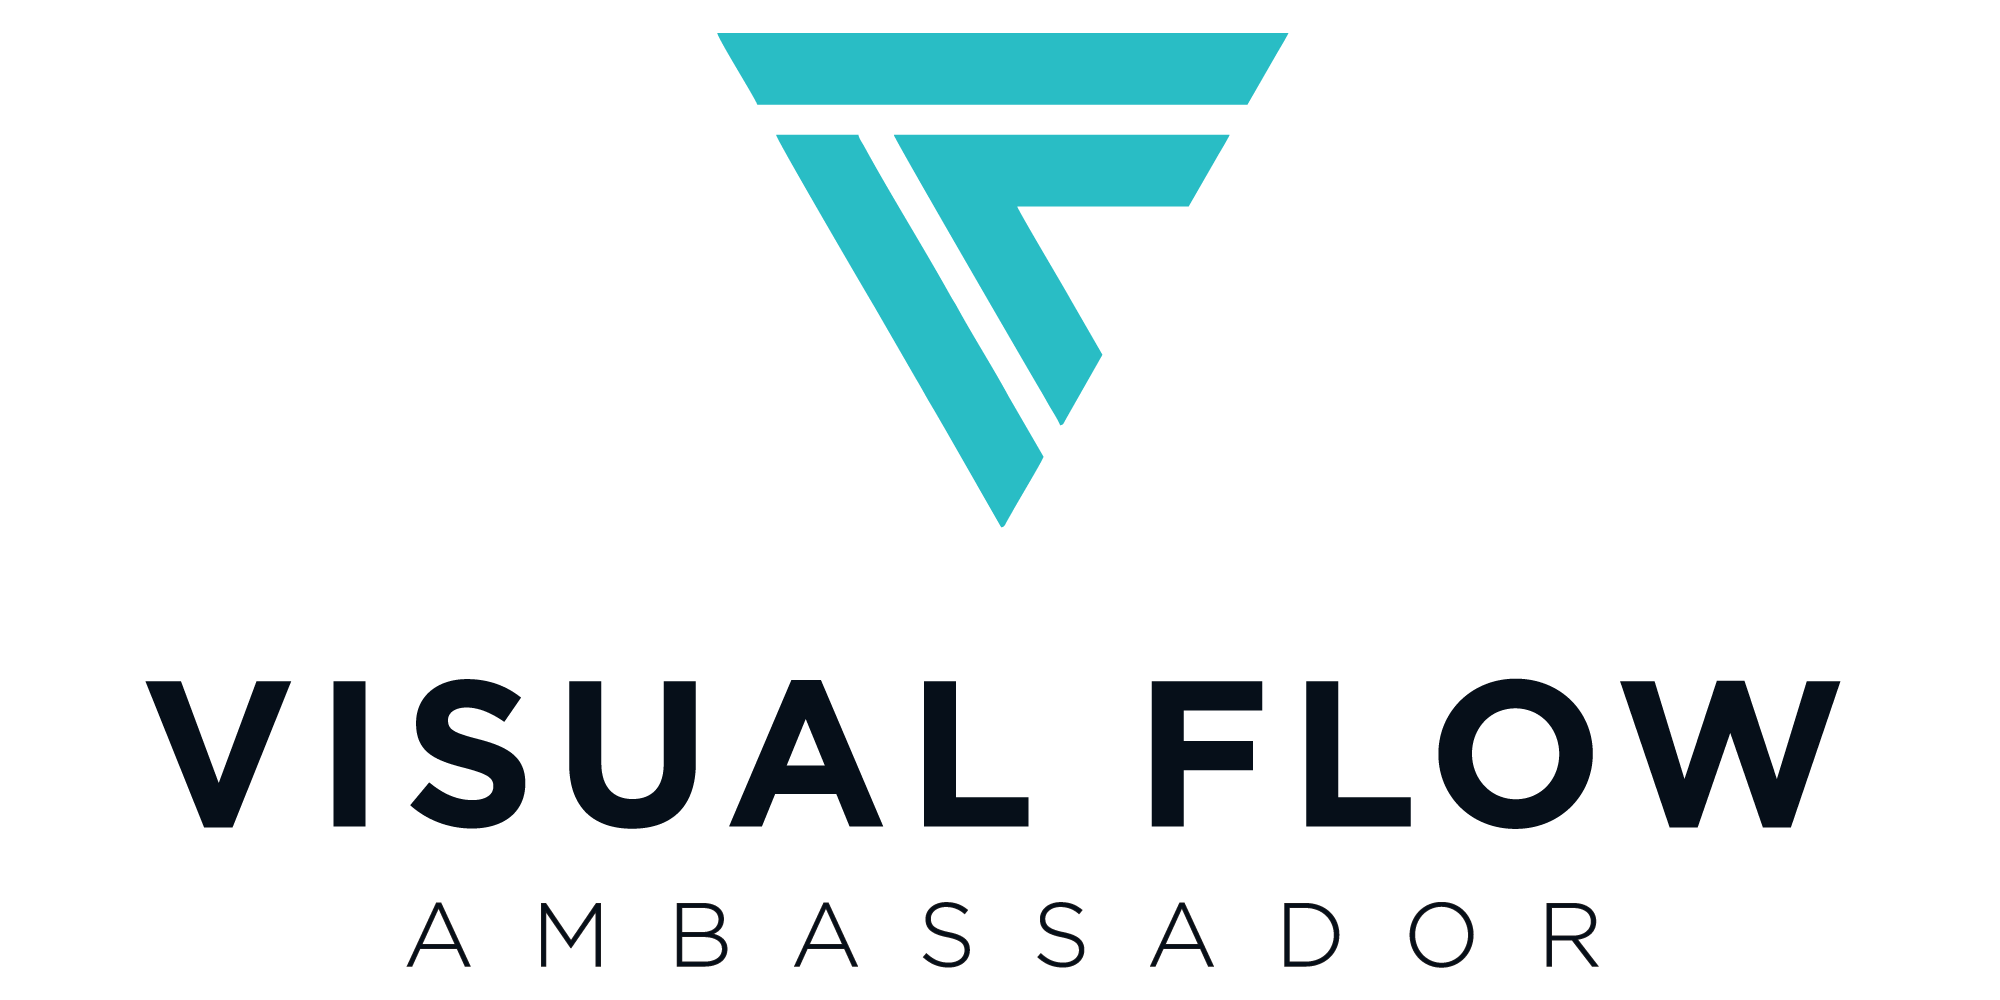 vf ambassador logo v1